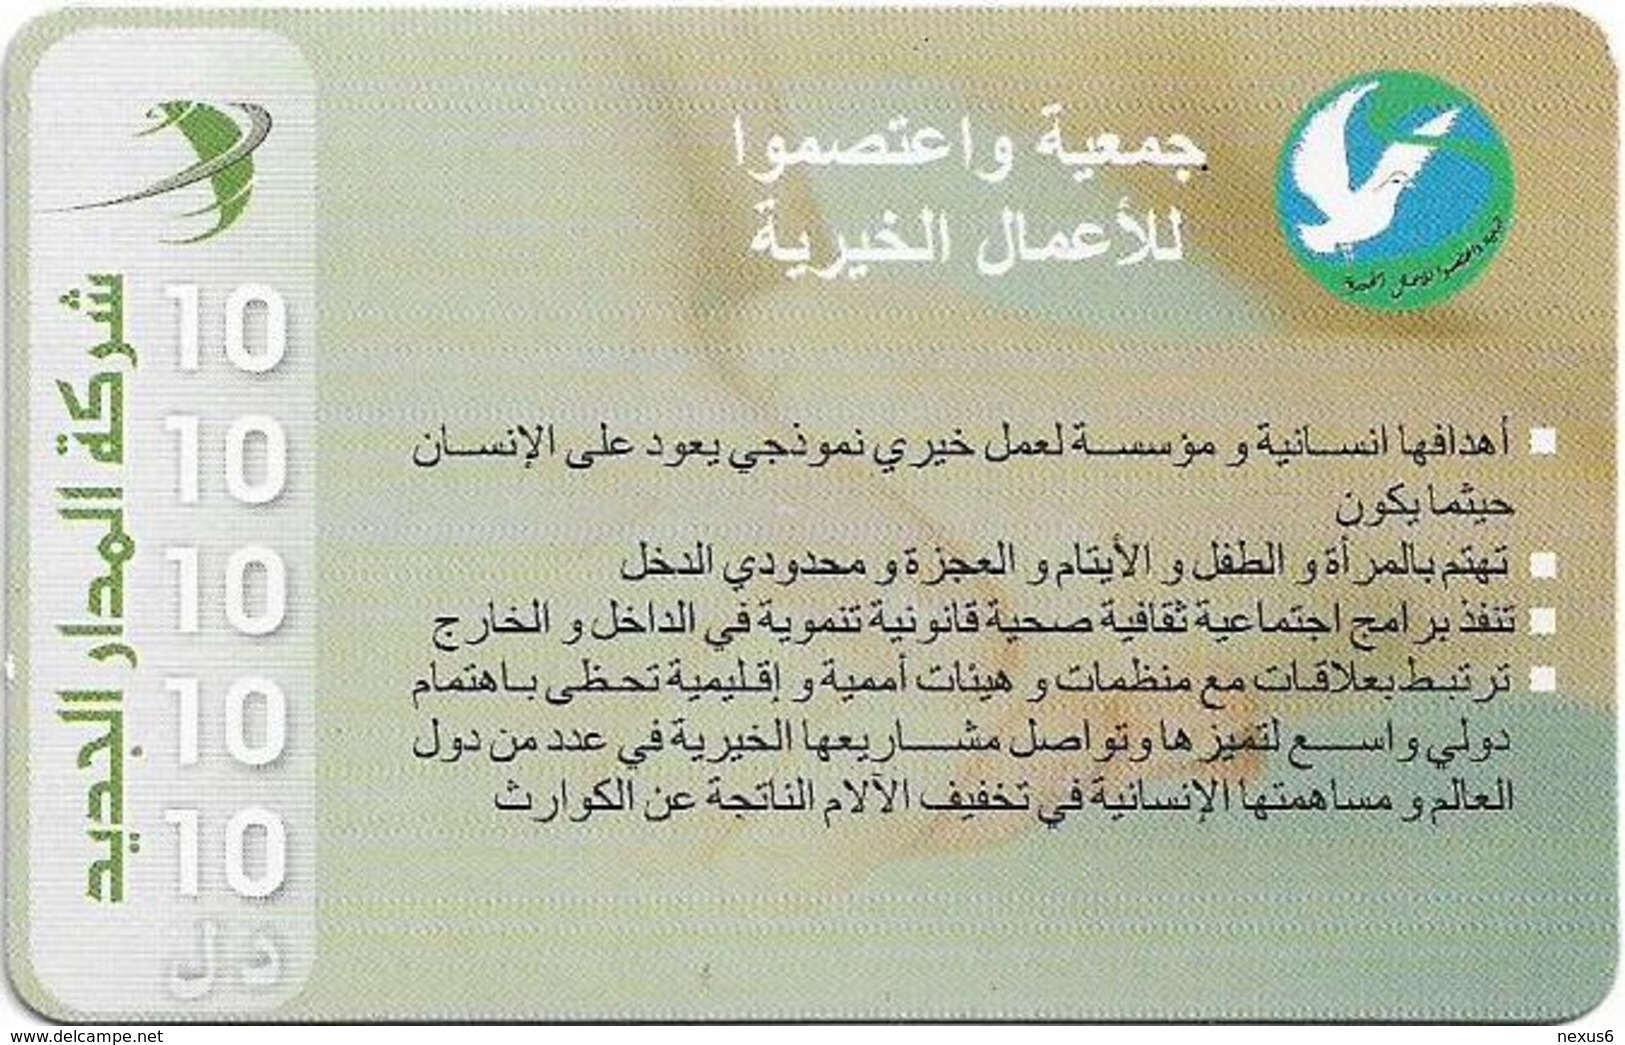 Libya - Almadar - Message In Arabic, 10LD Prepaid Card, Used - Libia